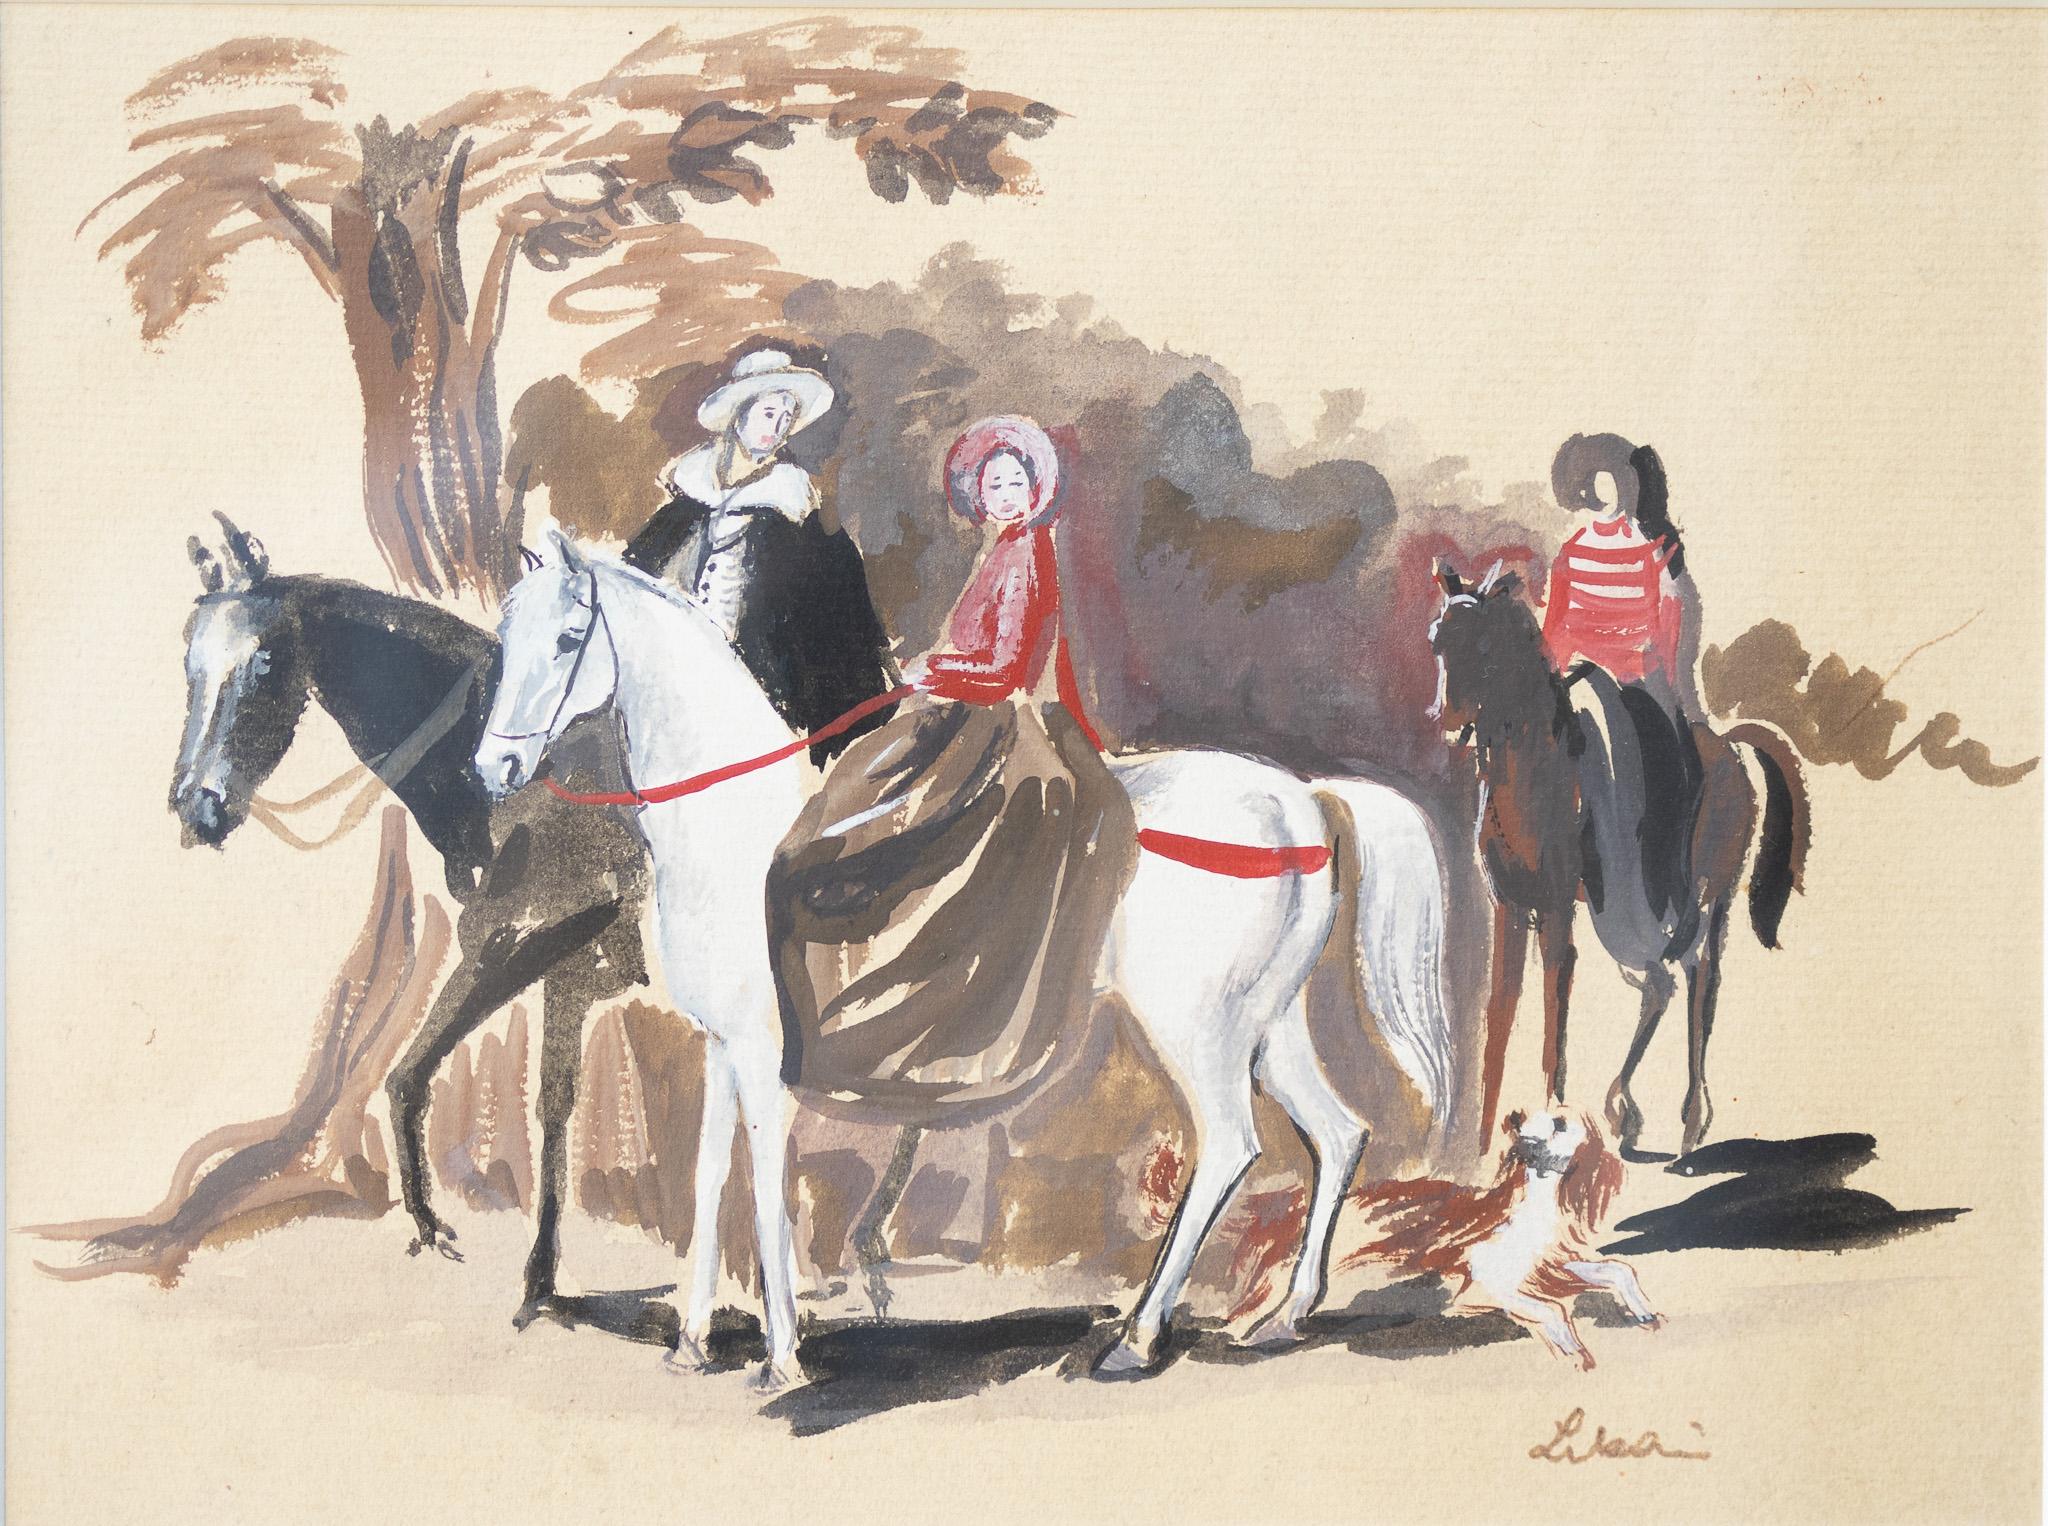 Gustav Likan Figurative Painting - "People on Horseback" Eva Peron Mural Sketch